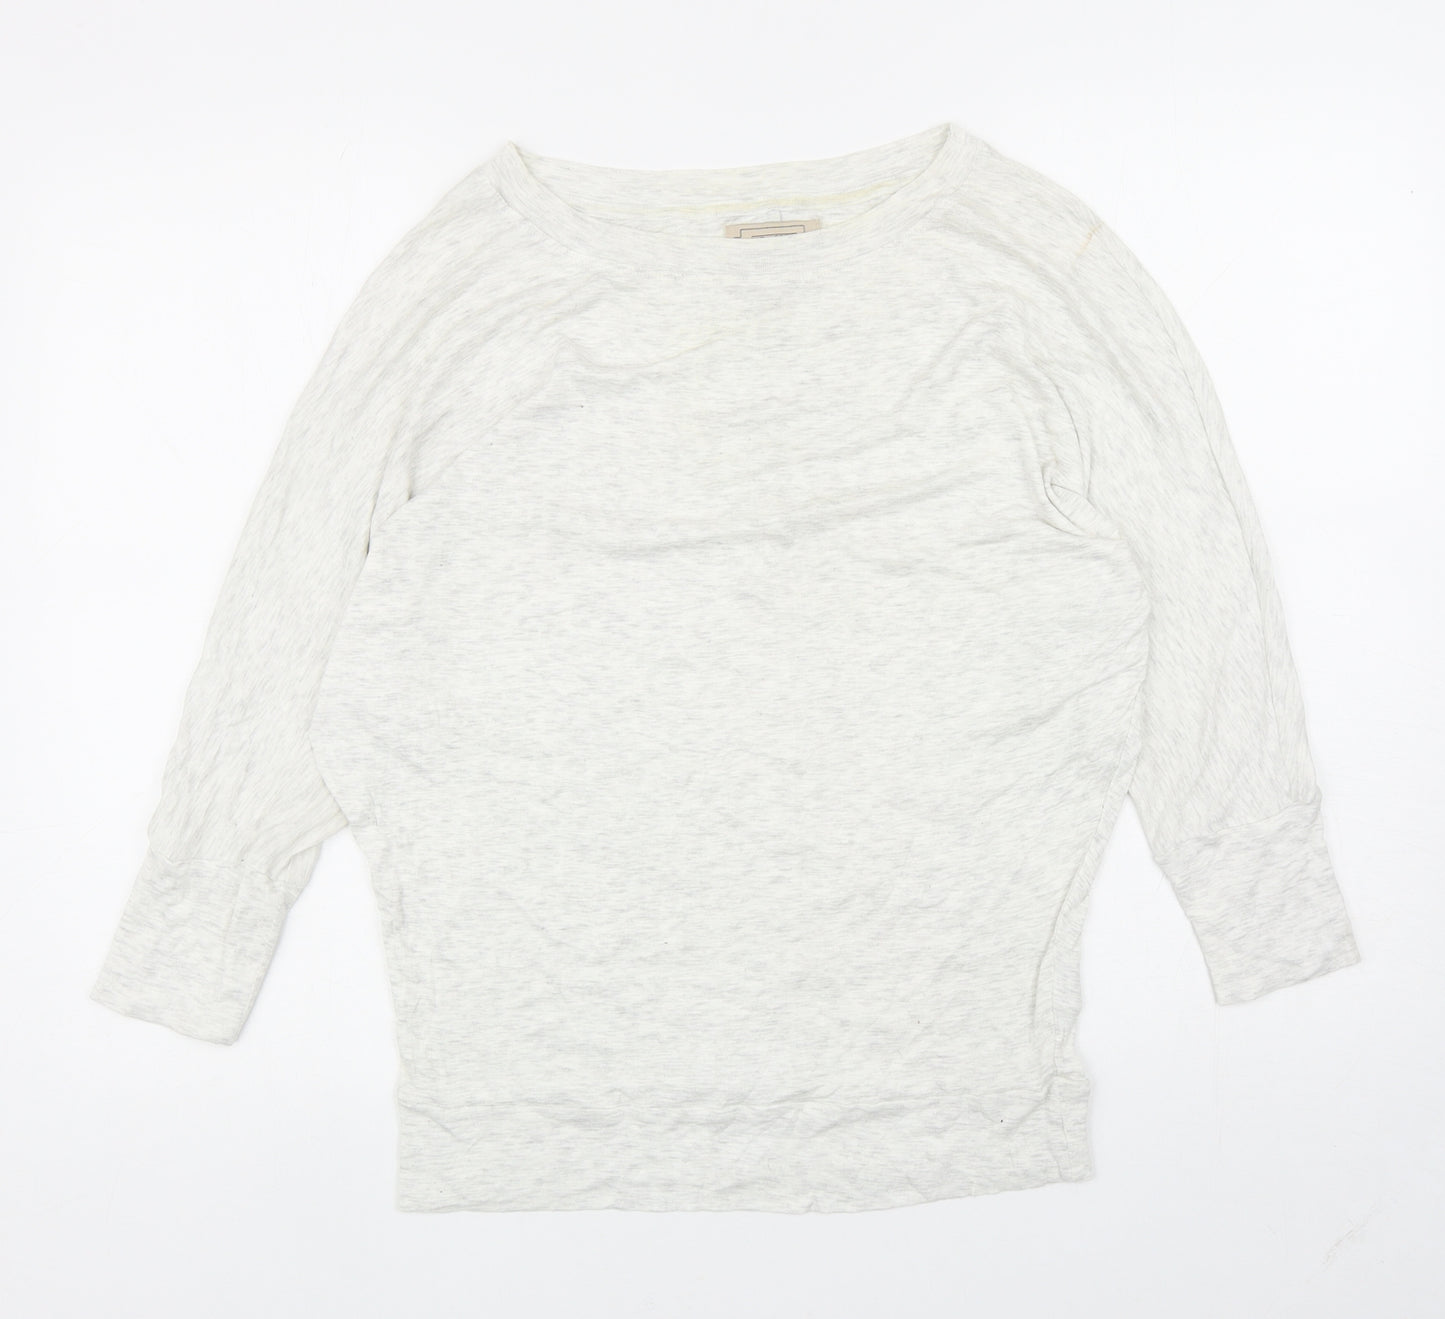 Arabella & Addison Womens Ivory Cotton Basic T-Shirt Size L Boat Neck